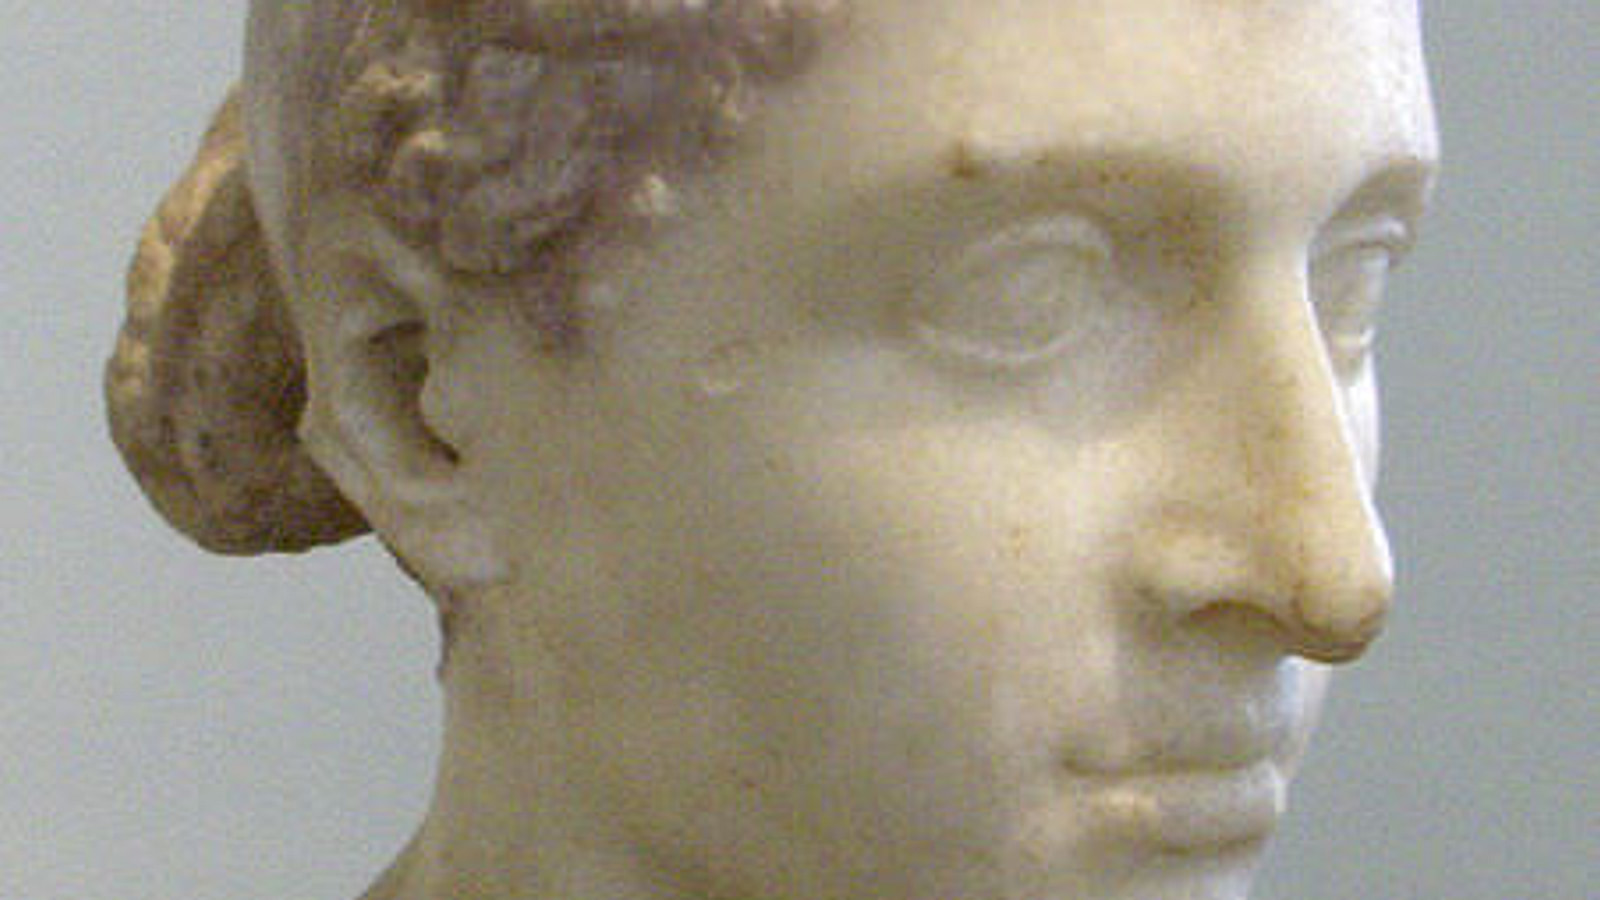 Bust of Cleopatra (Illustration) - World History Encyclopedia